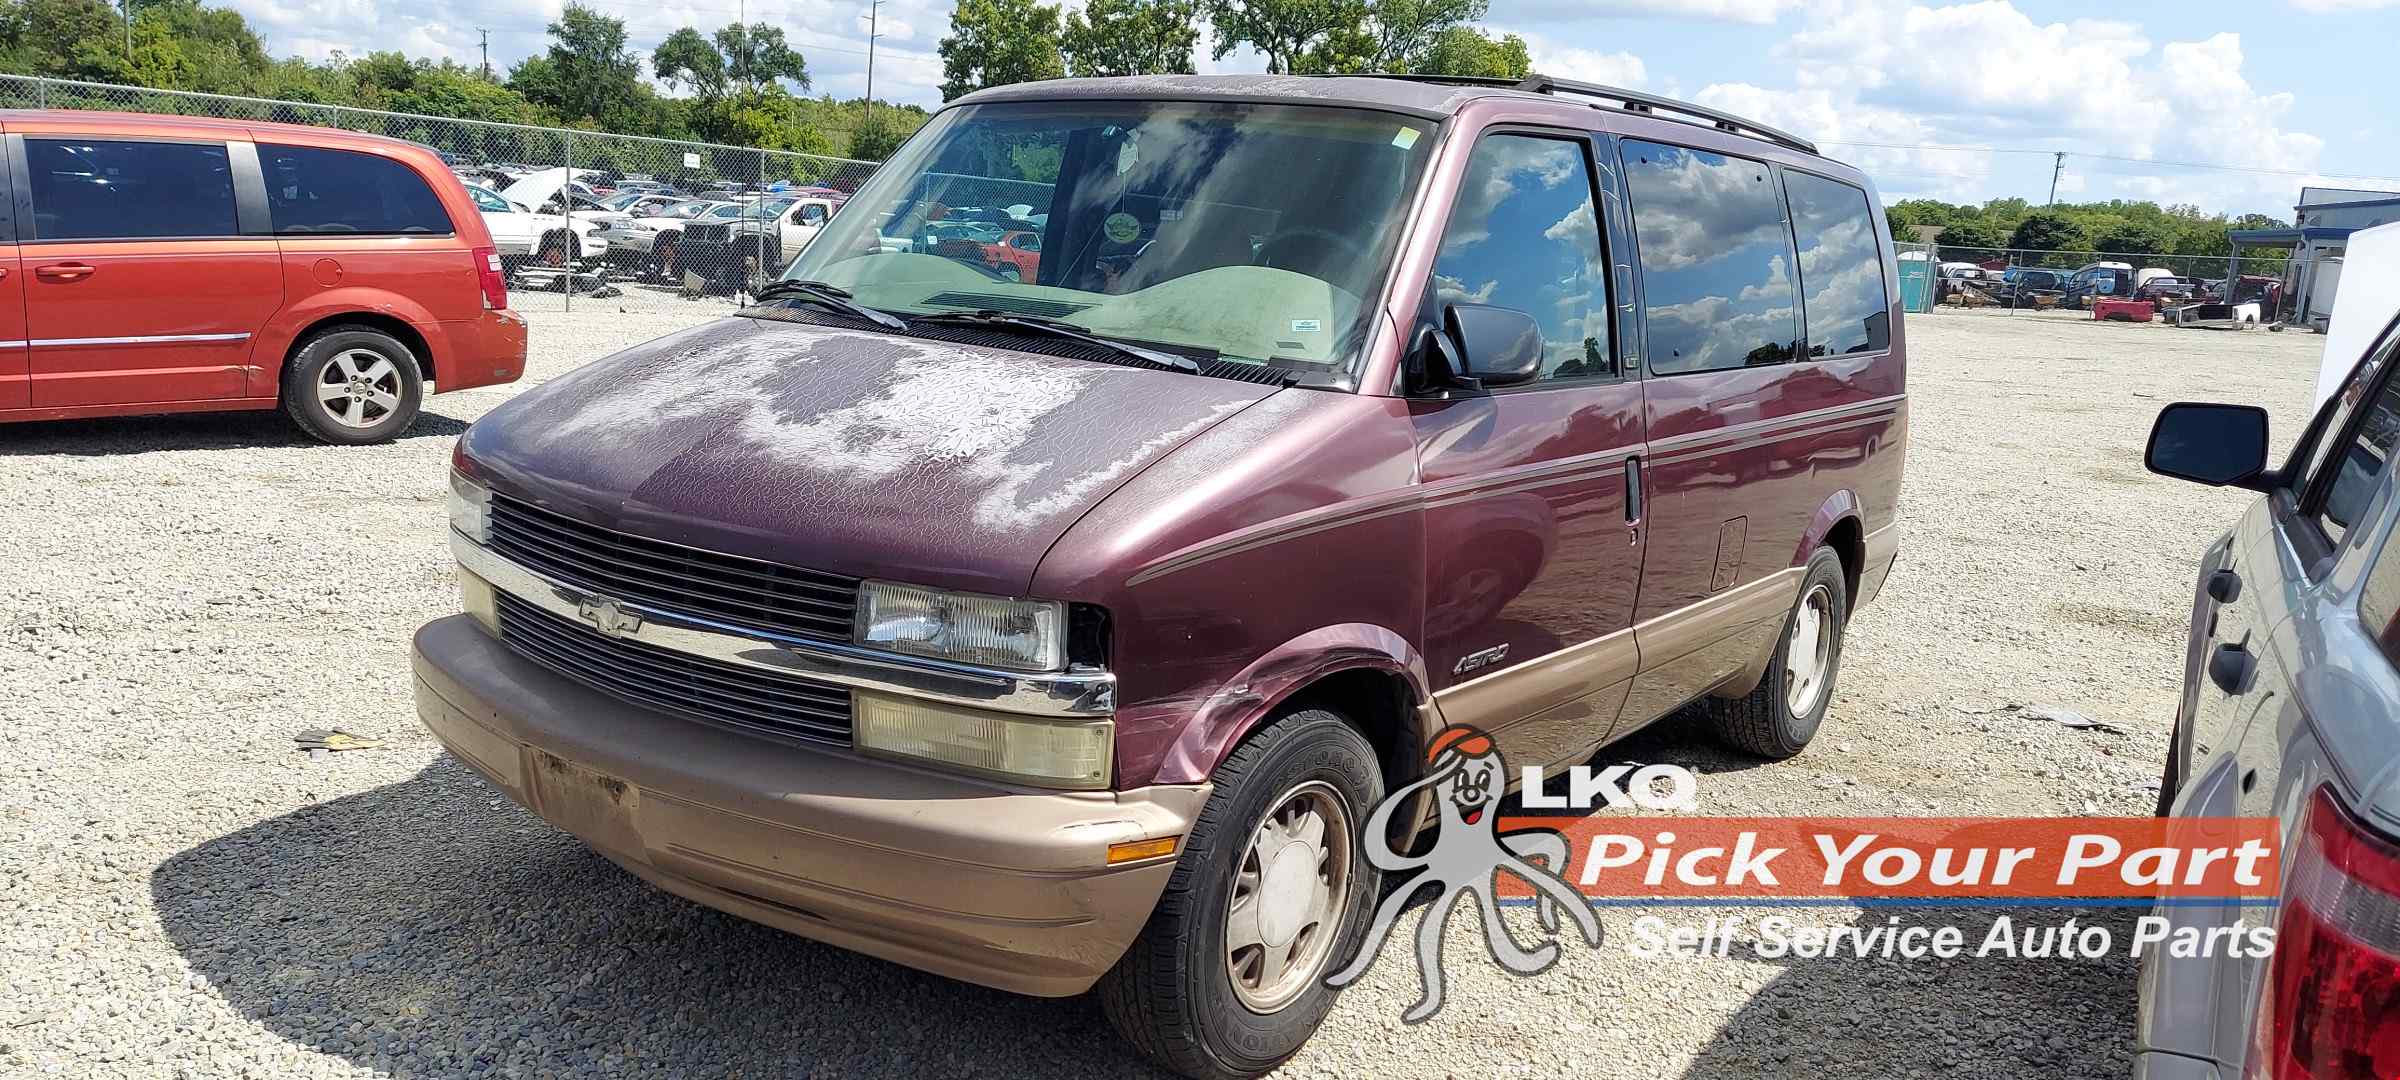 1998 Chevrolet Astro Used Auto Parts | Dayton